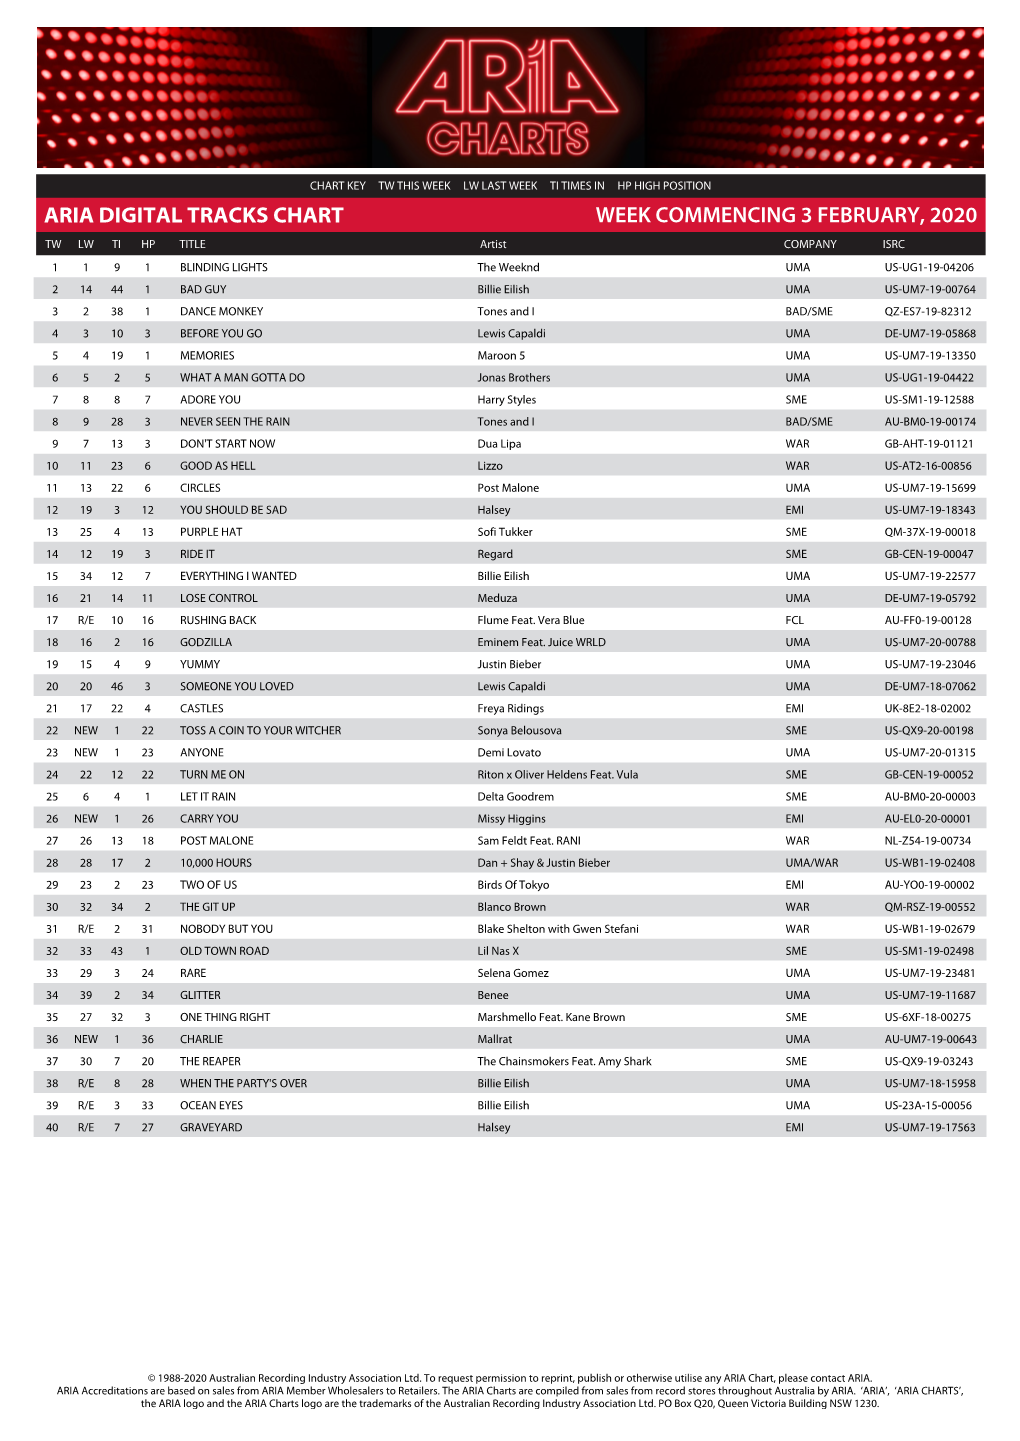 ARIA Digital Tracks Chart.Pdf